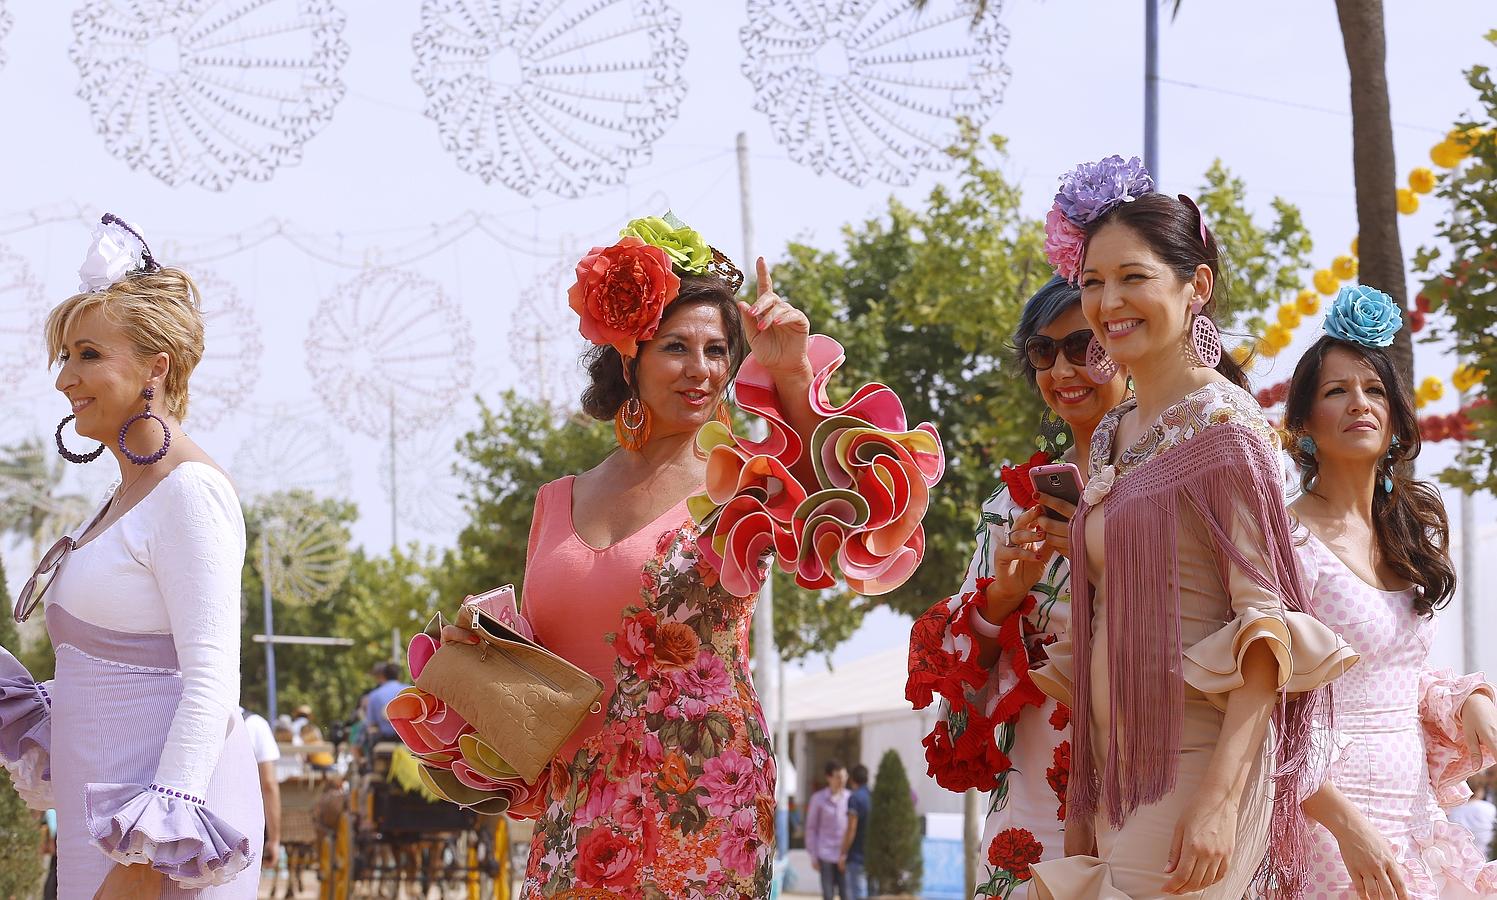 El rebrotar del martes de la Feria de Córdoba, en imágenes